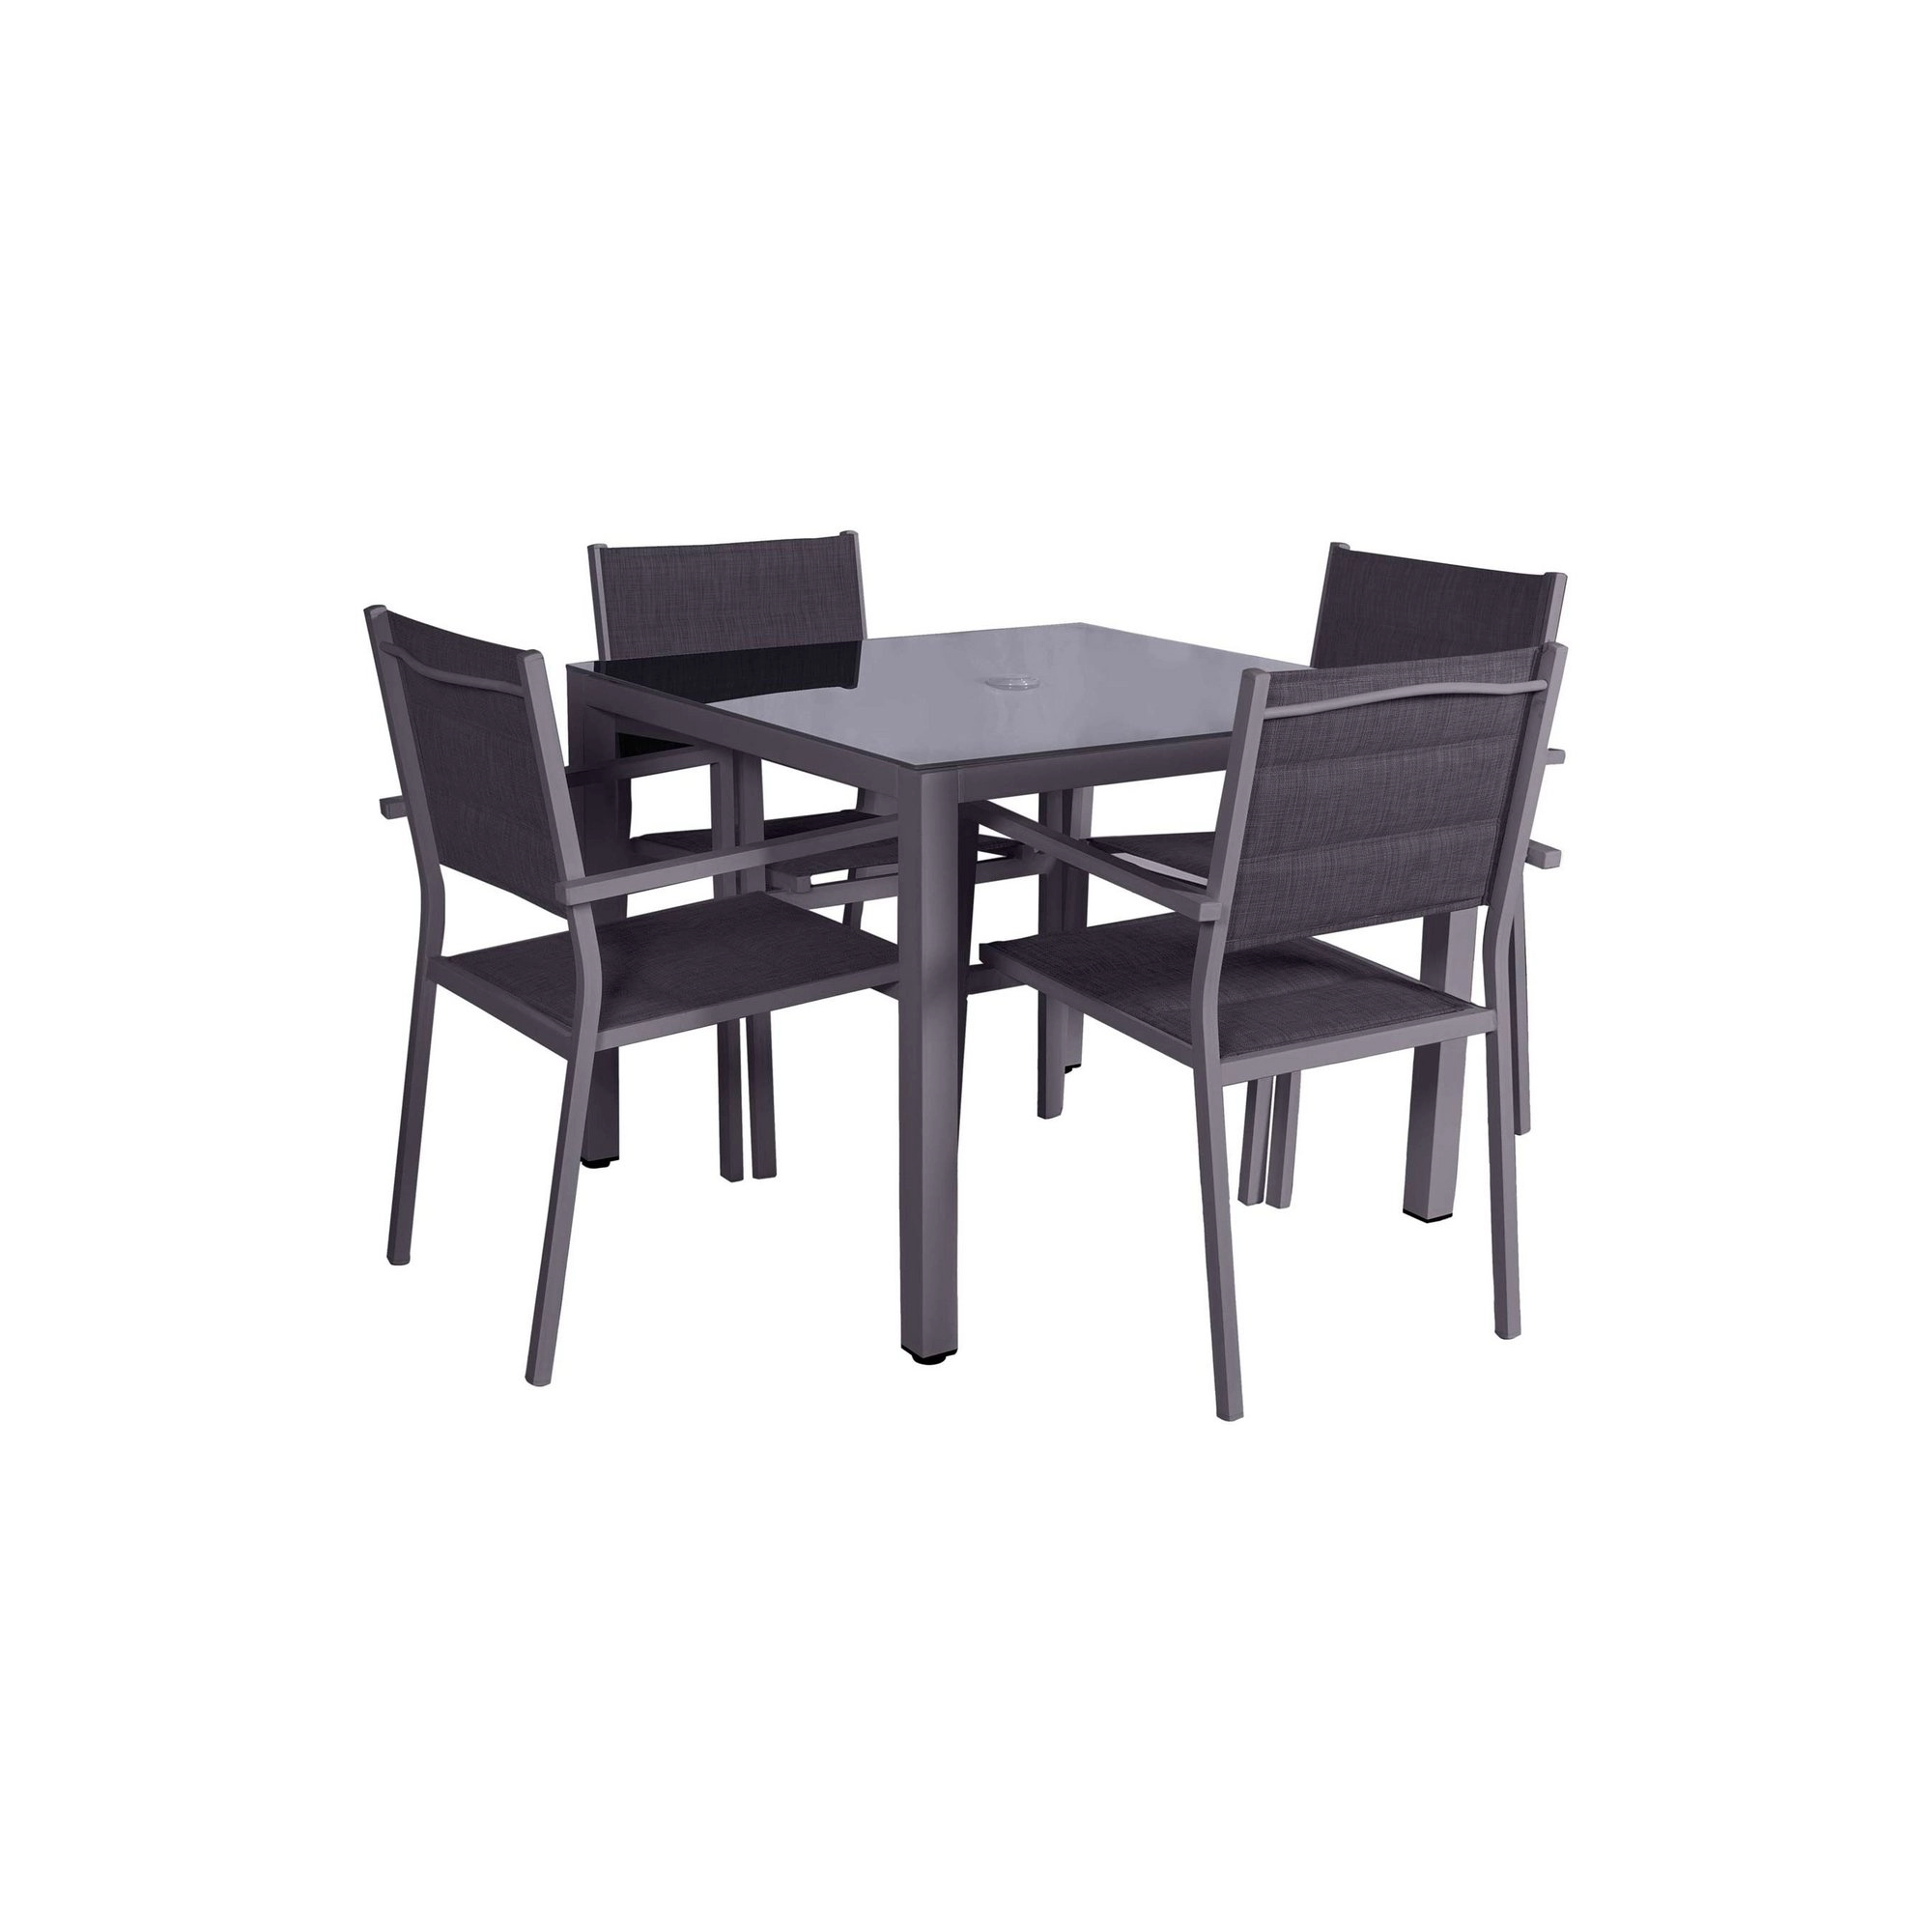 Amir Royalcraft Sorrento 4 Seater Dining Set Black Aluminium / Textylene - wilko